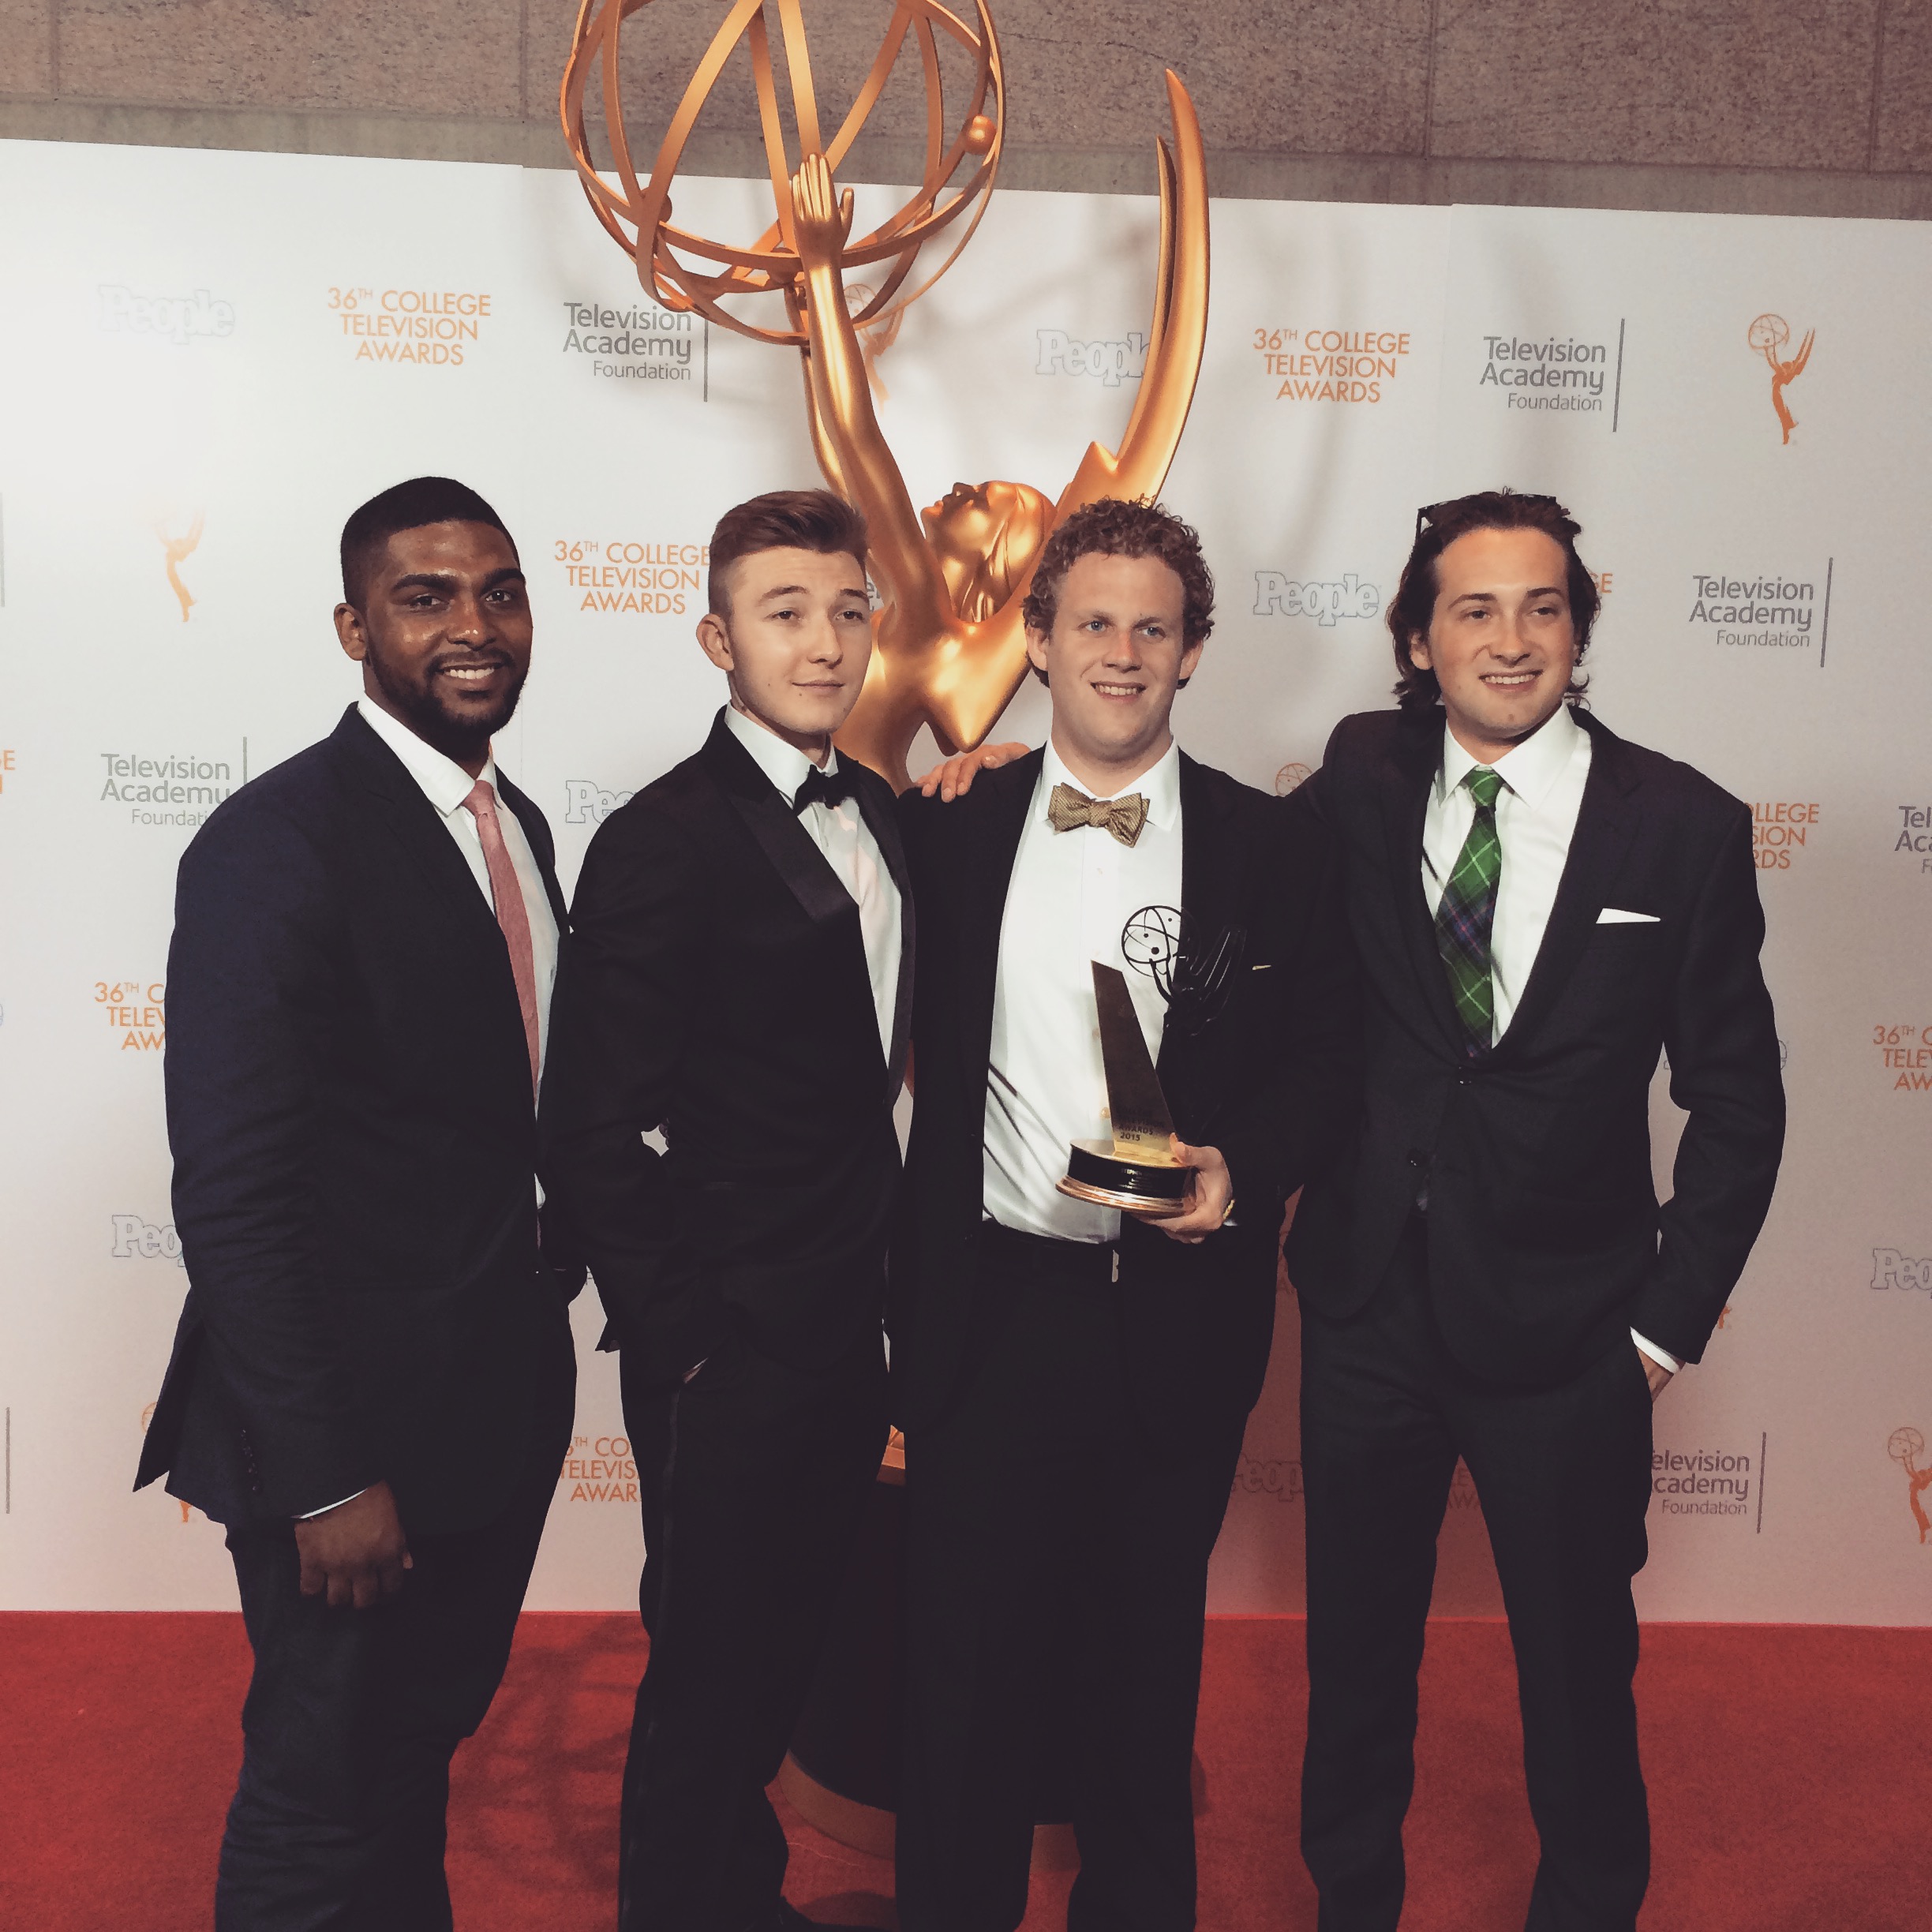 Jeffrey Matos, Stephen Gemmiti, Walker Ward, and Tripp Aquadro at the 36th Annual College Television Awards.